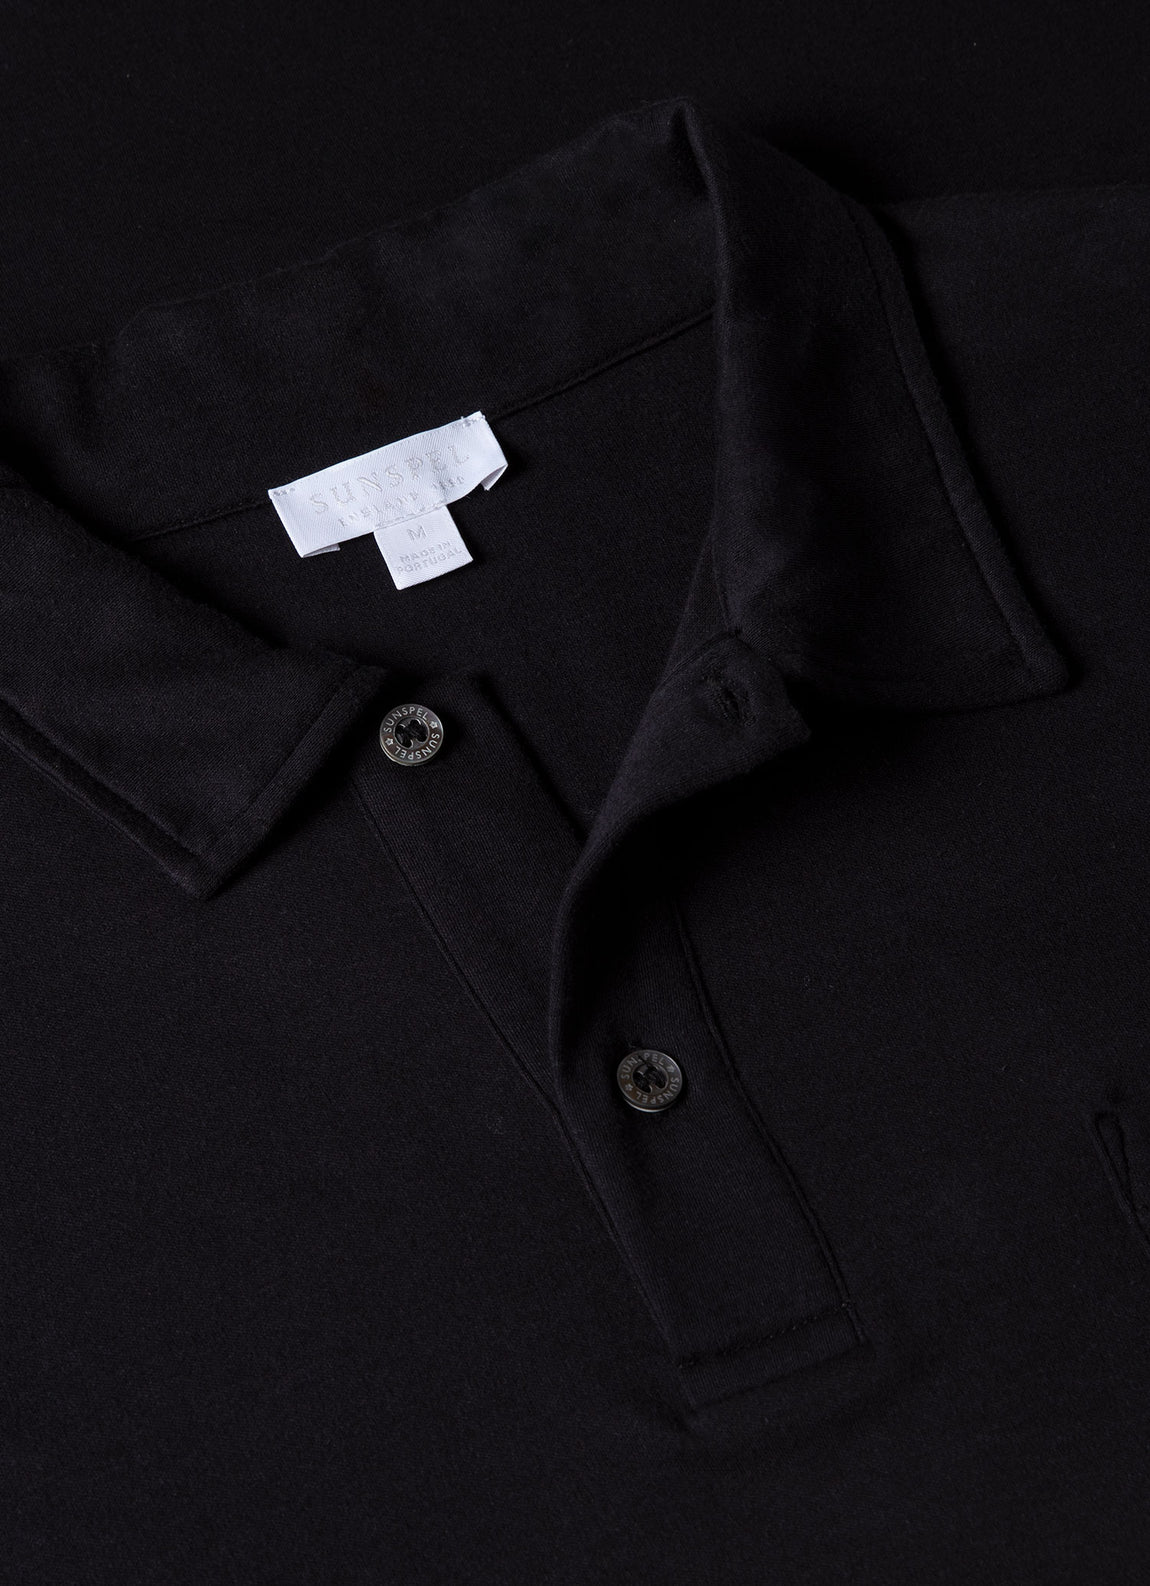 Men's Sea Island Cotton Riviera Polo Shirt in Black | Sunspel